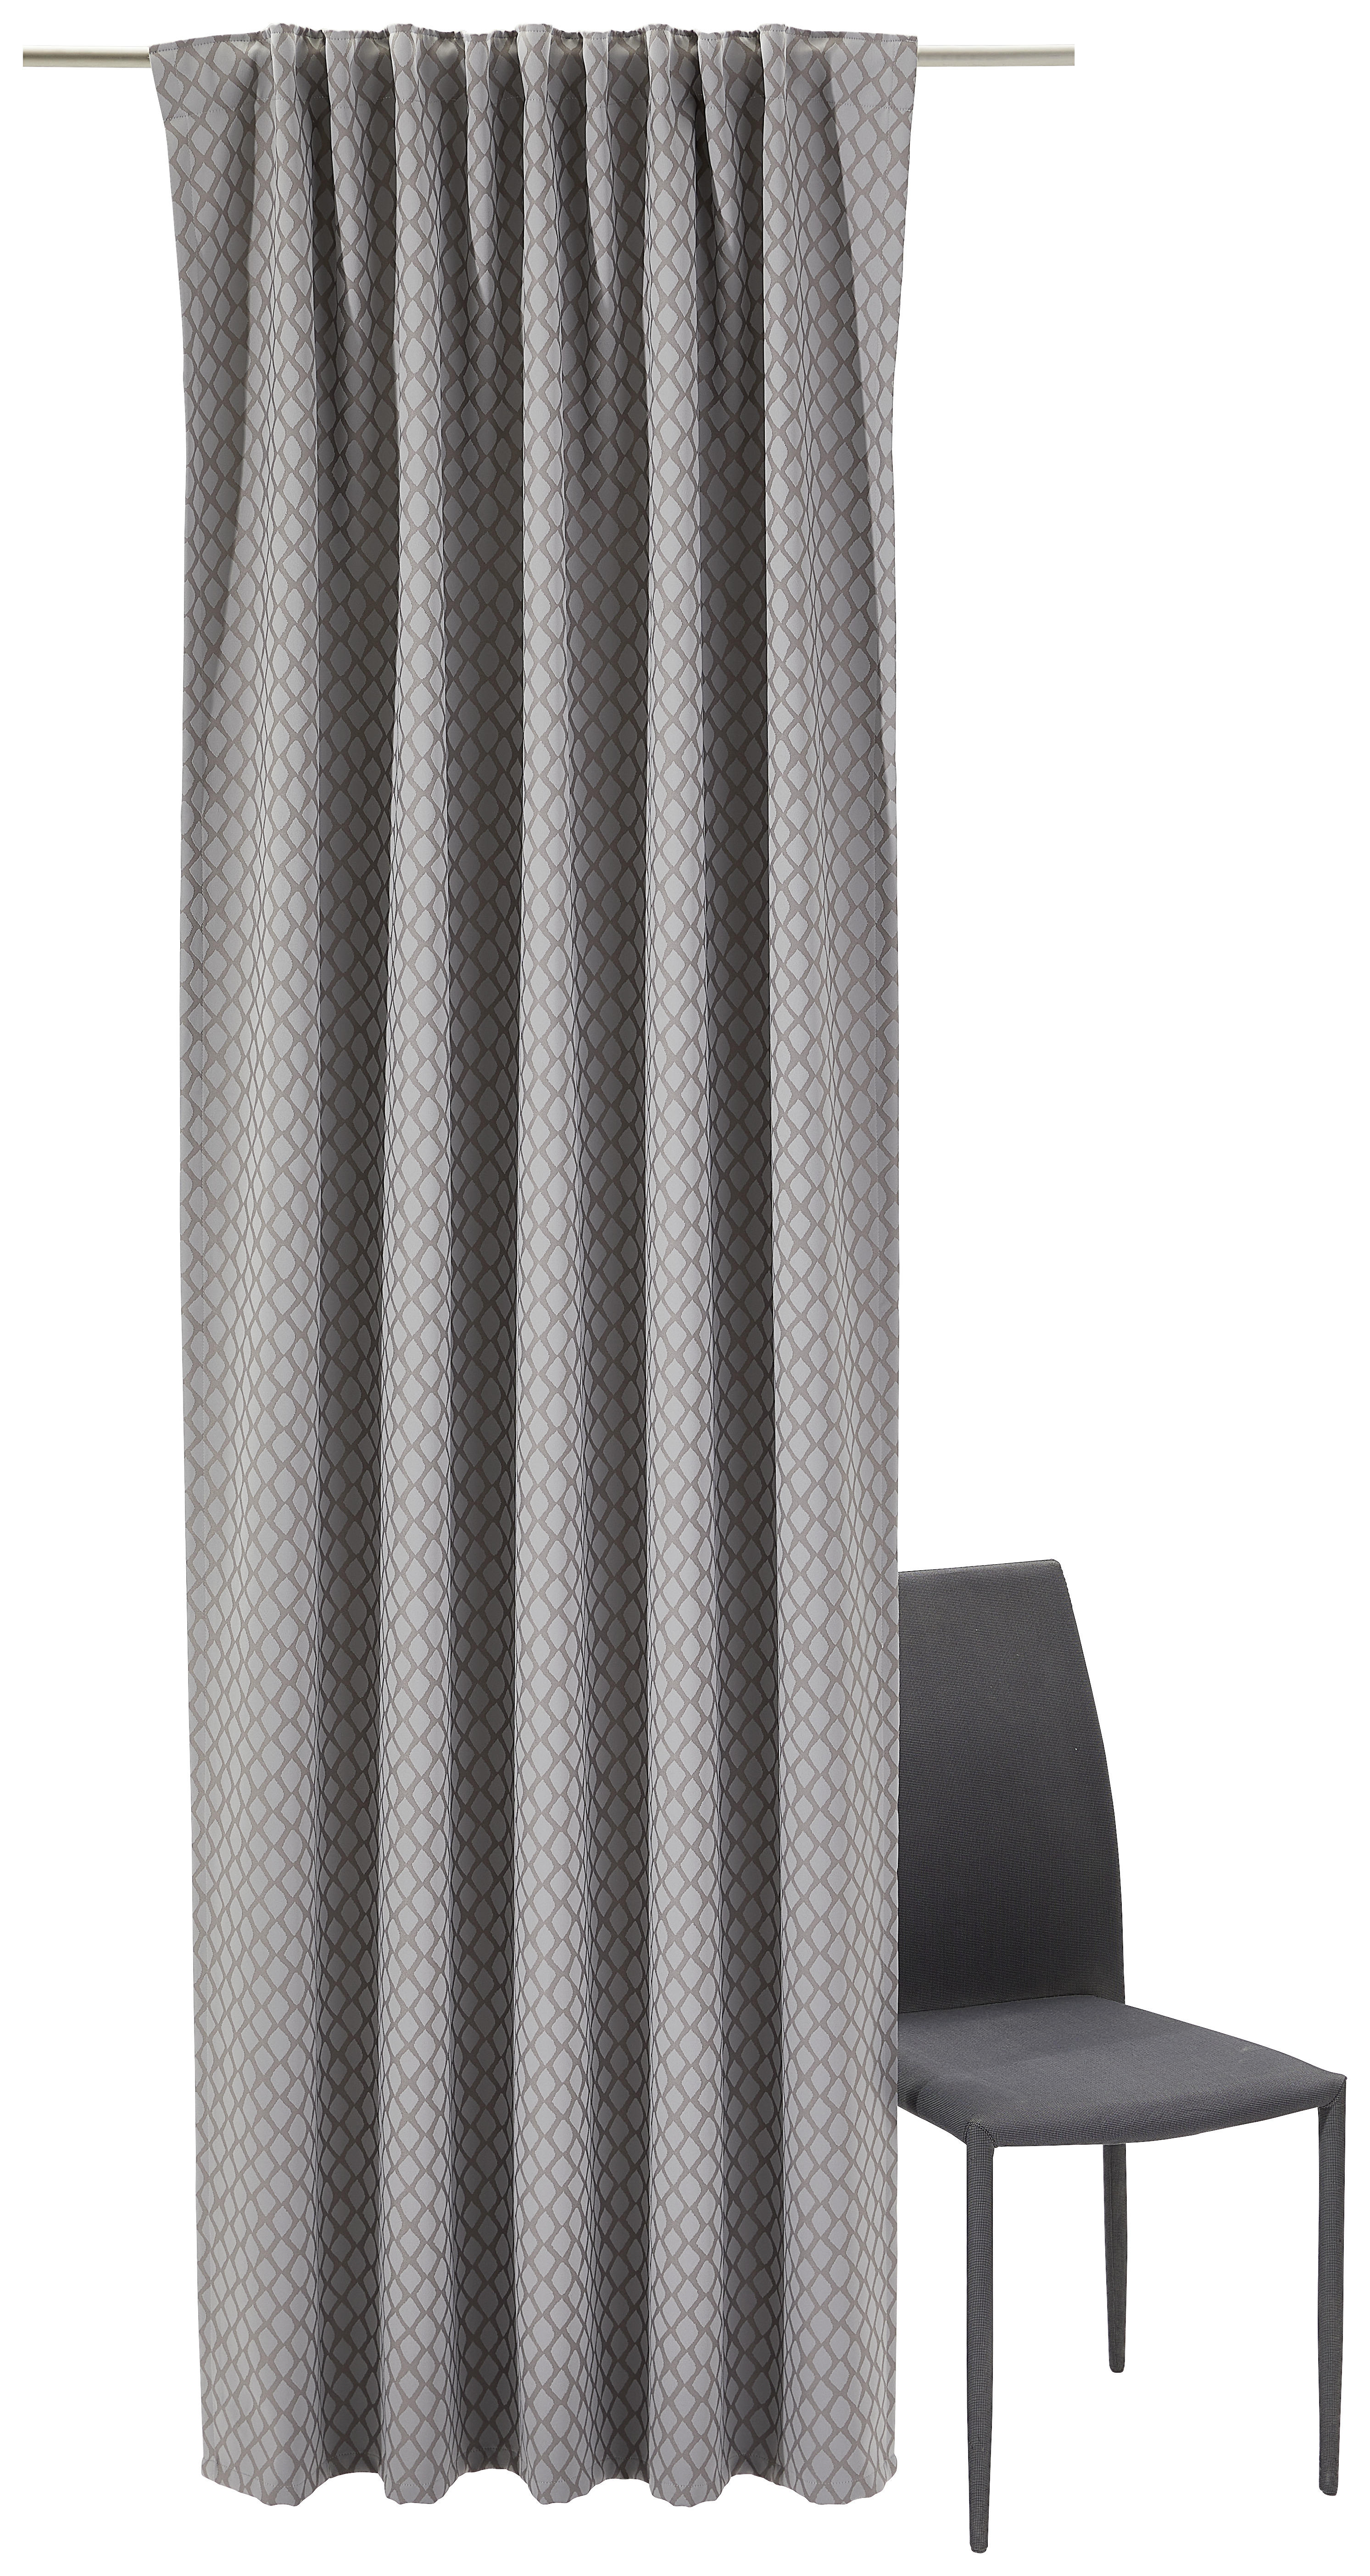 FERTIGVORHANG LUNA blickdicht 140/245 cm   - Grau, KONVENTIONELL, Textil (140/245cm) - Dieter Knoll